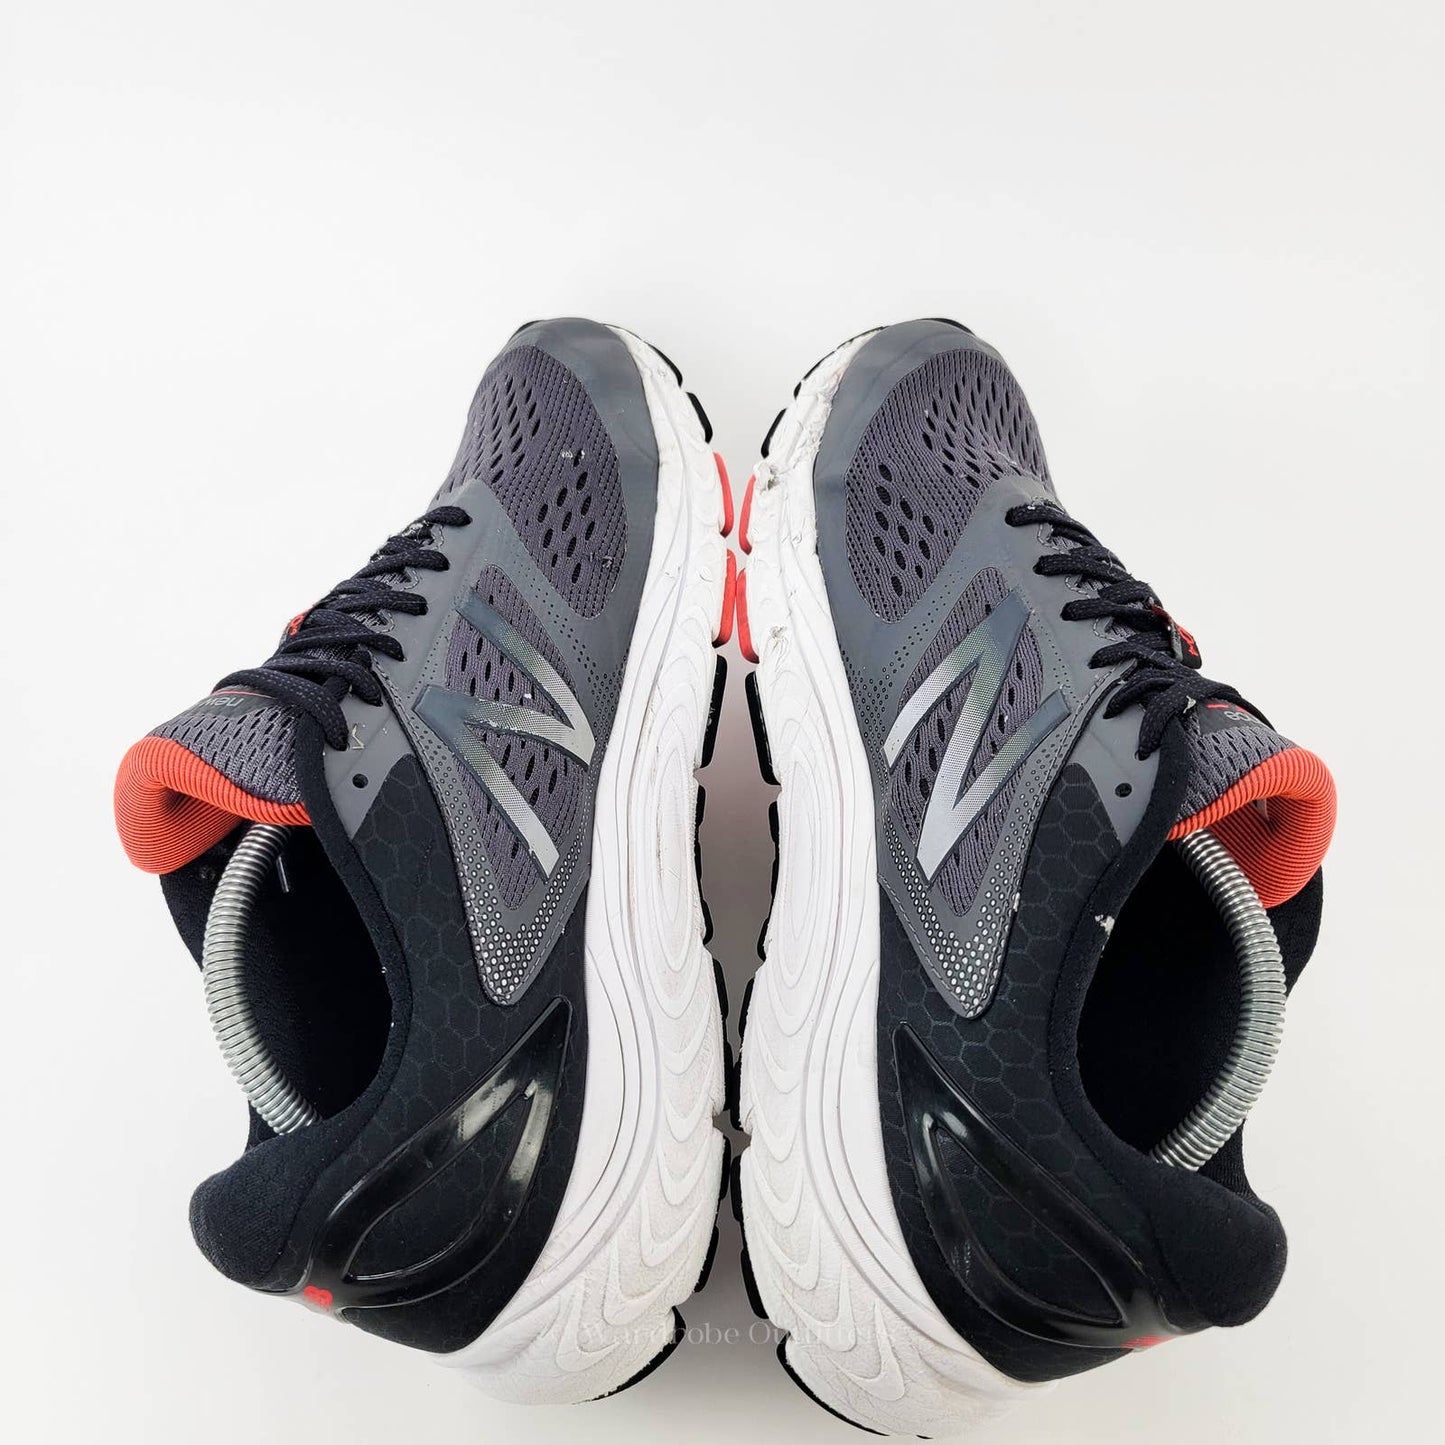 New Balance 840v4 'Magnet' Running Shoes - 11